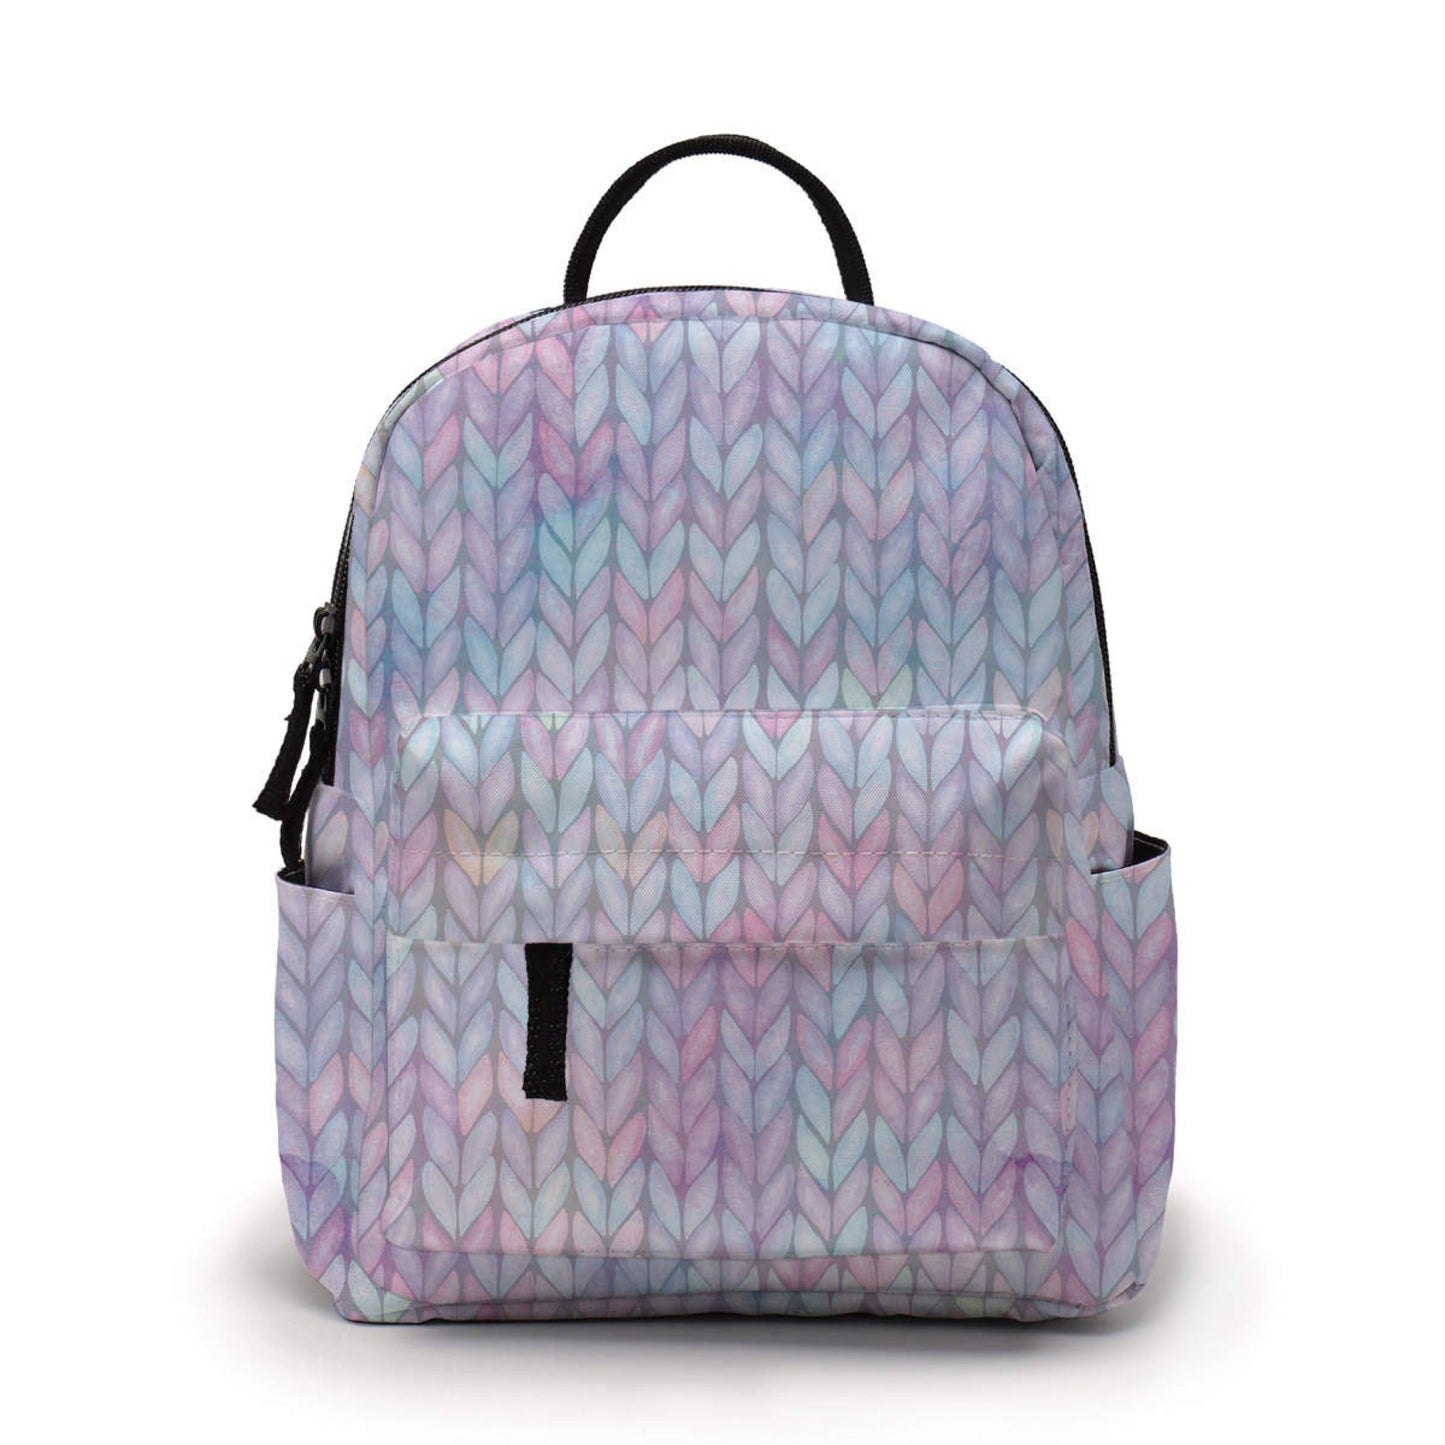 Mini Backpack - Knit Galaxy Pastel